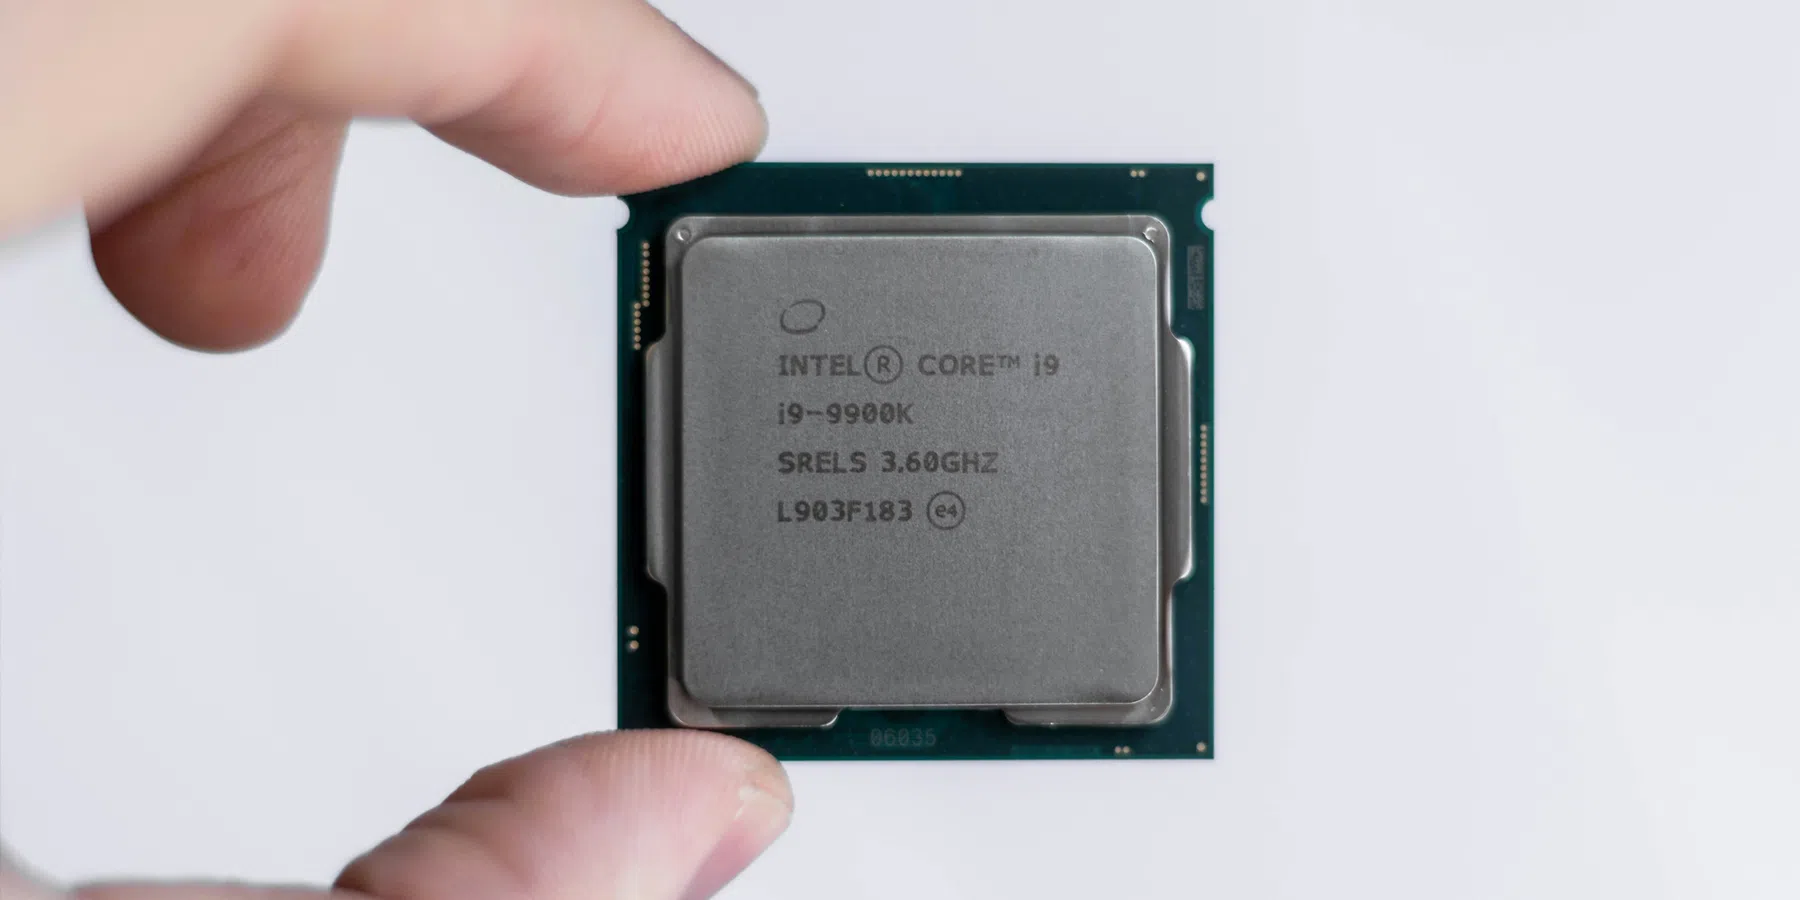 Chinese overheid wil stoppen met Windows en chips van Intel en AMD